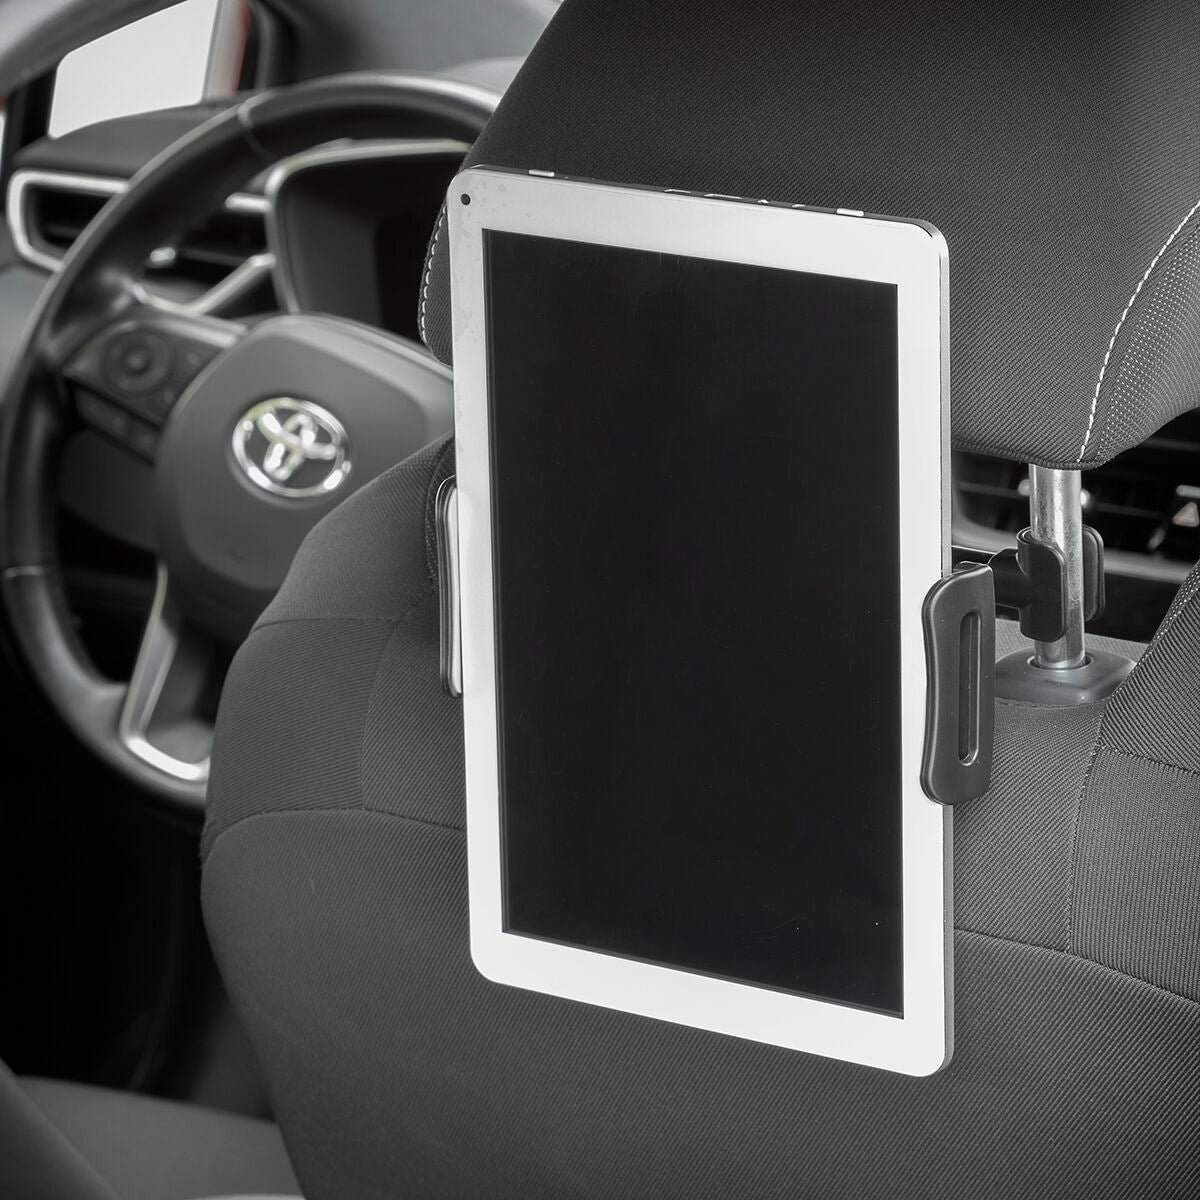 Support de tablette pour voiture taholer innovagoods